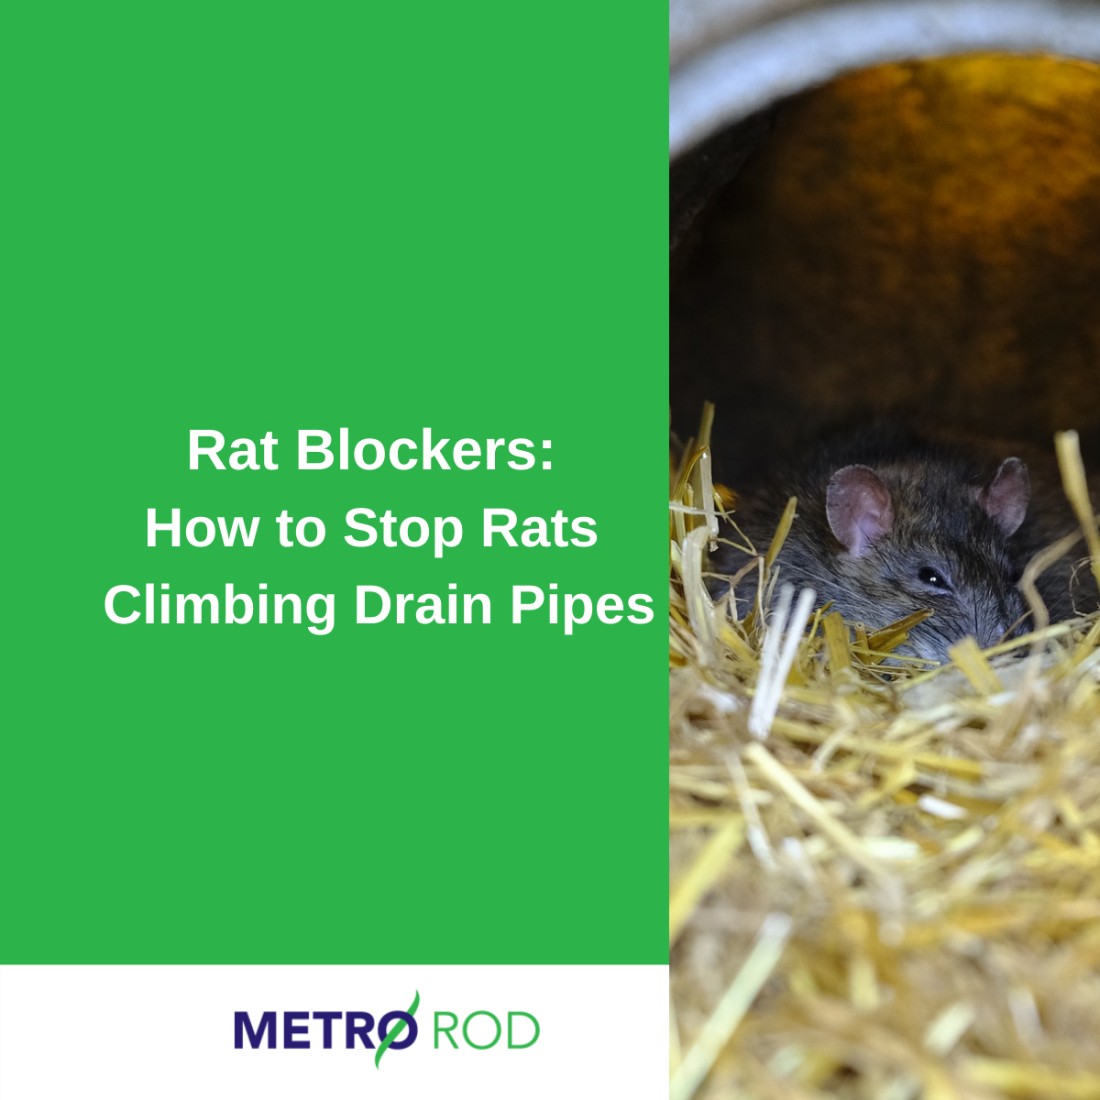 Rat Blockers: How to Stop Rats Climbing Drain Pipes